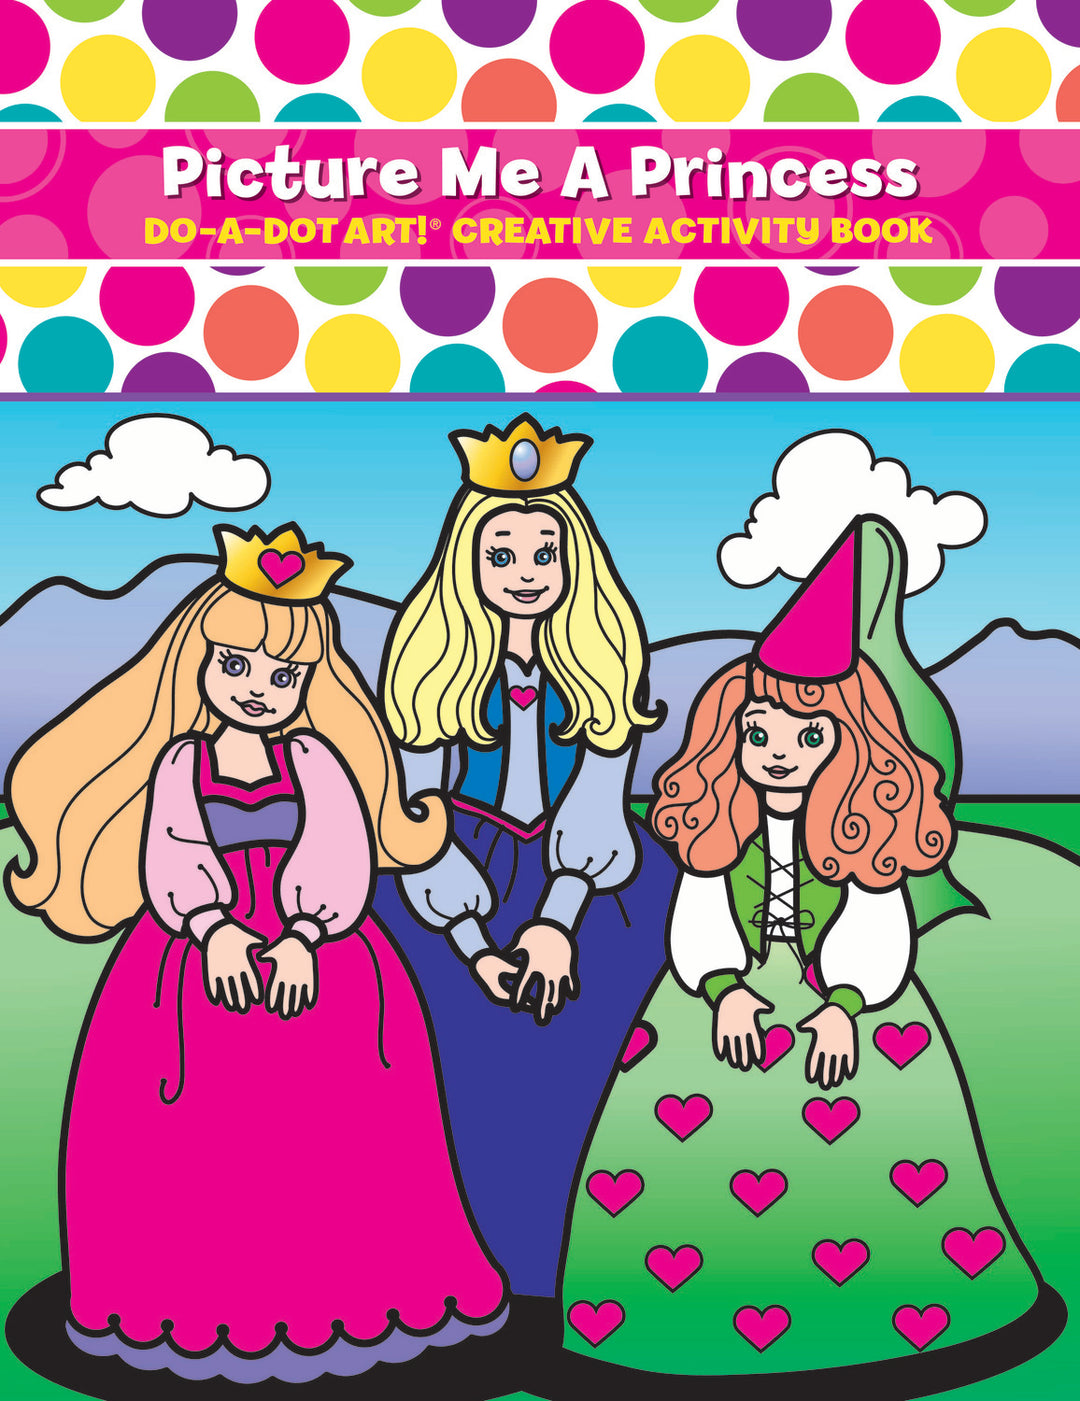 Do-A-Dot Picture Me A Princess Activity Book